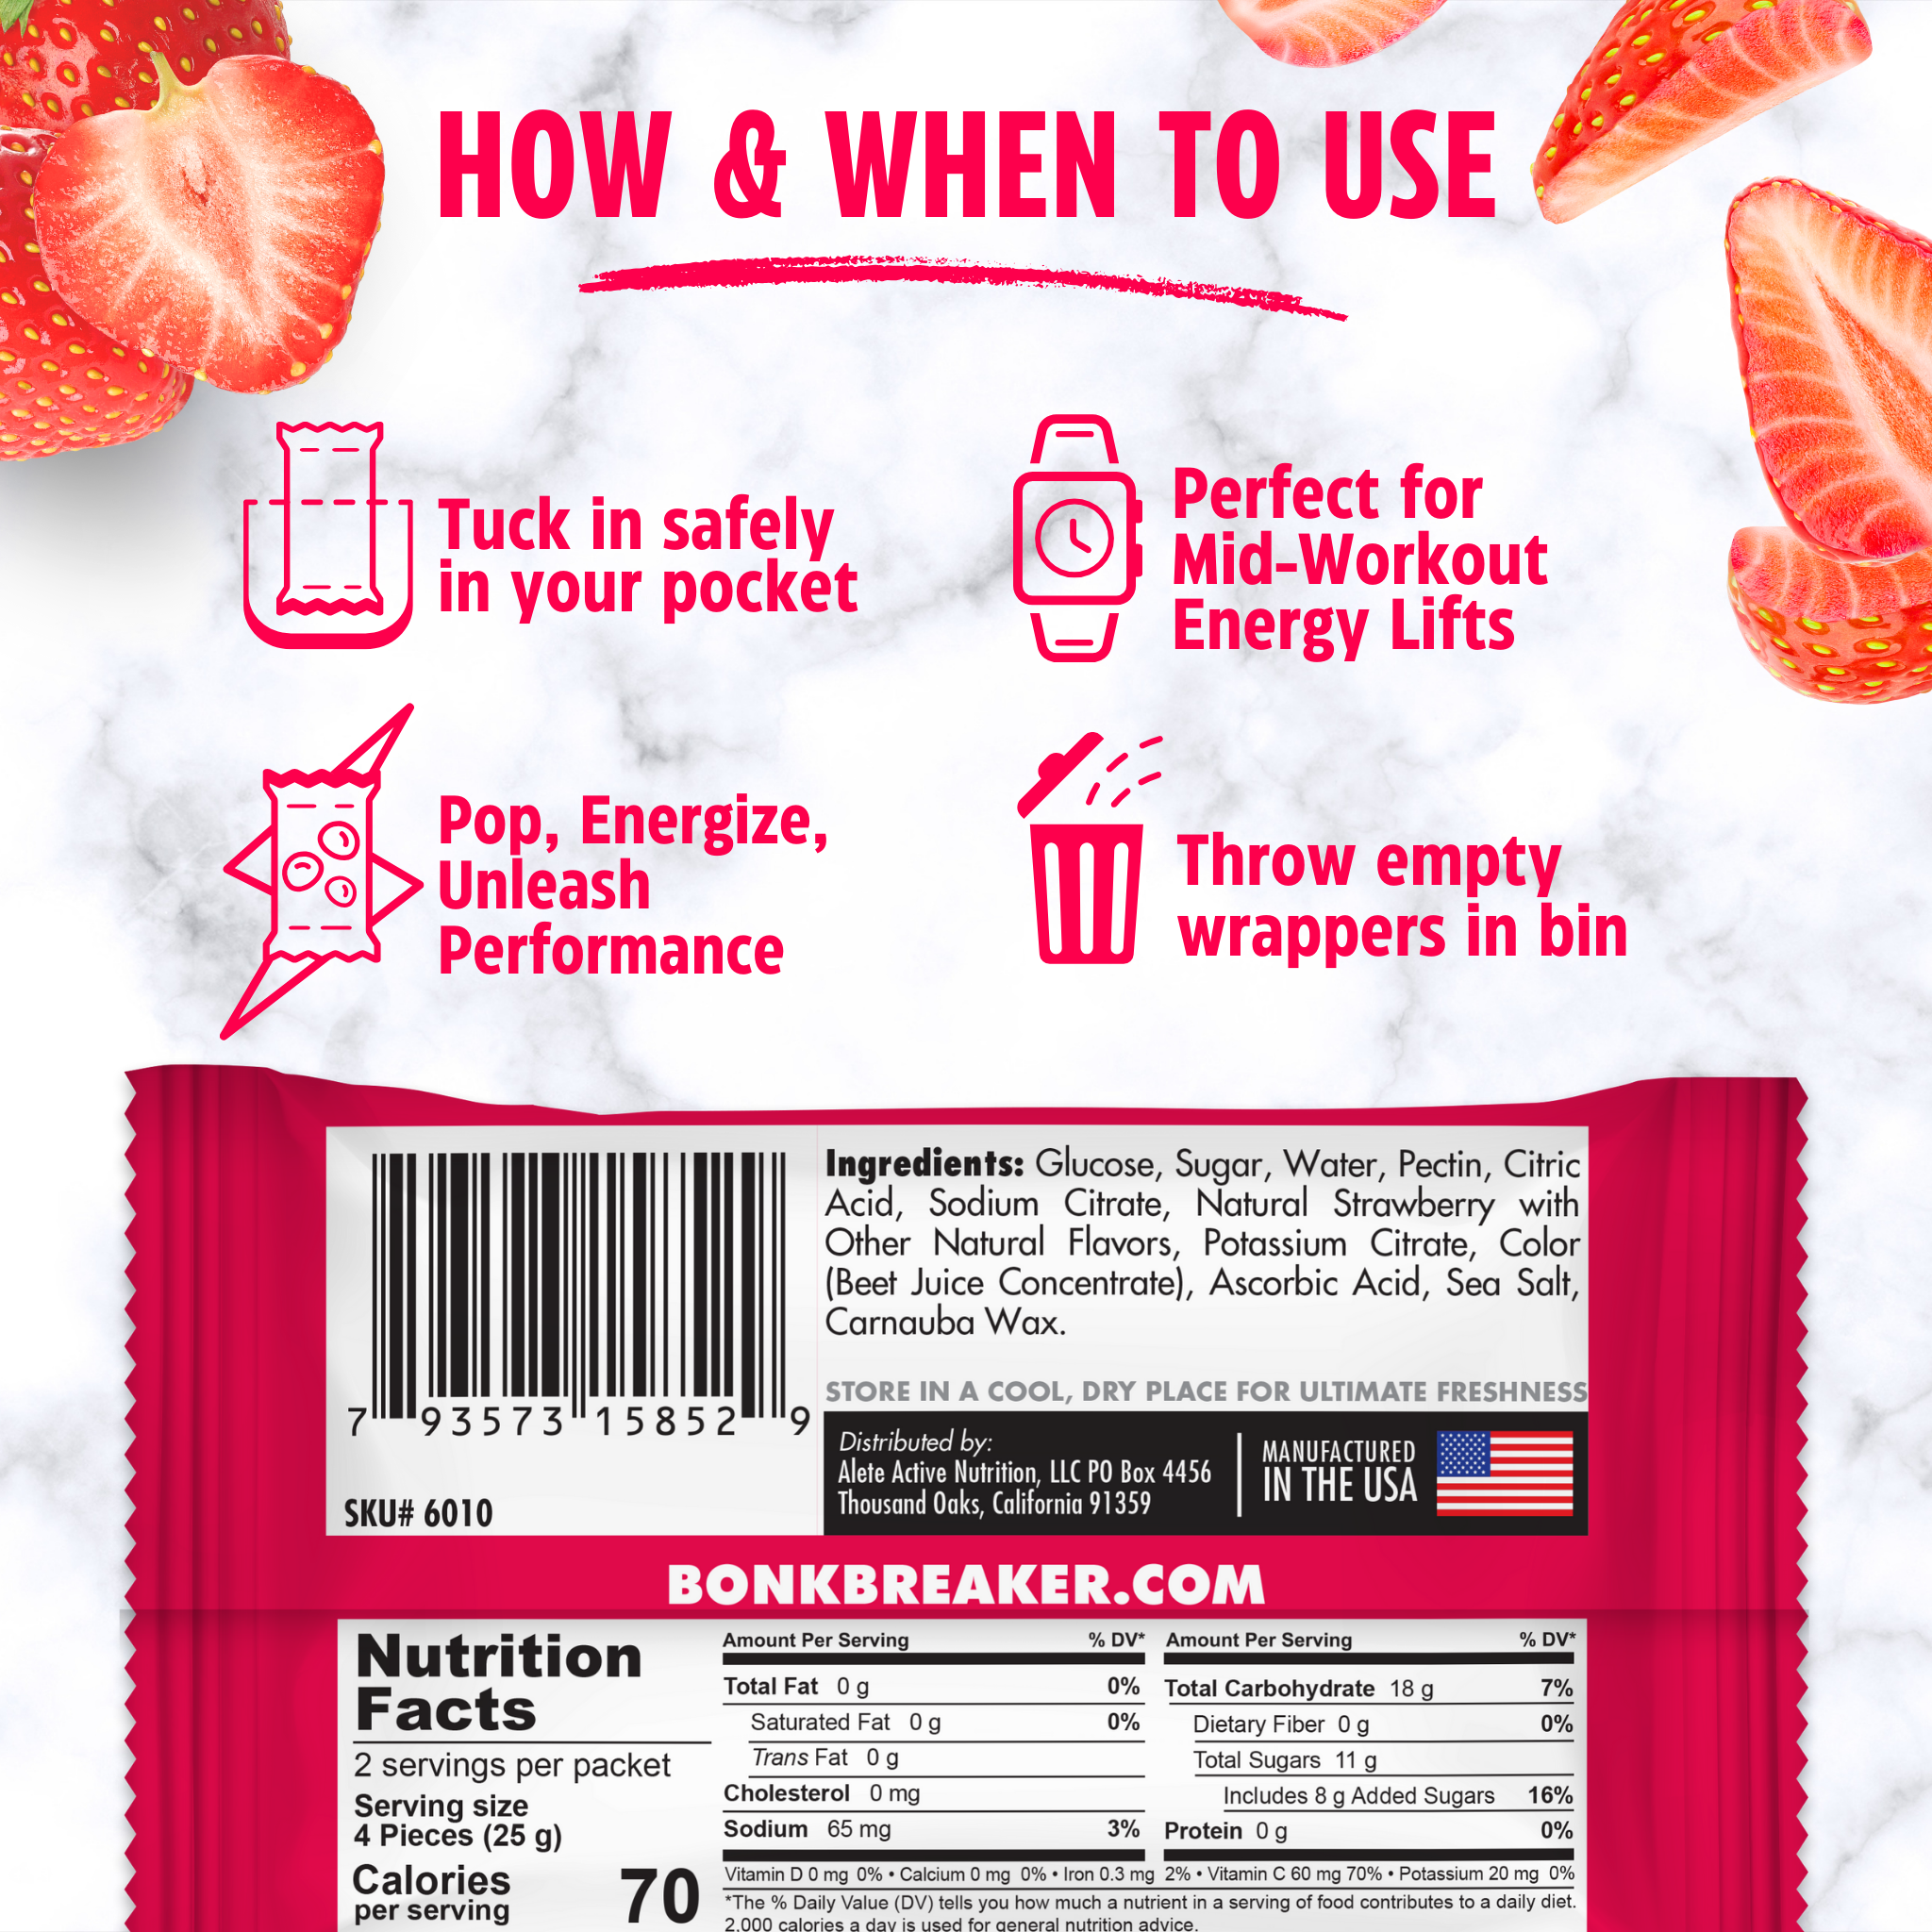 Bonk Breaker Energy chews Strawberry (10x50g)